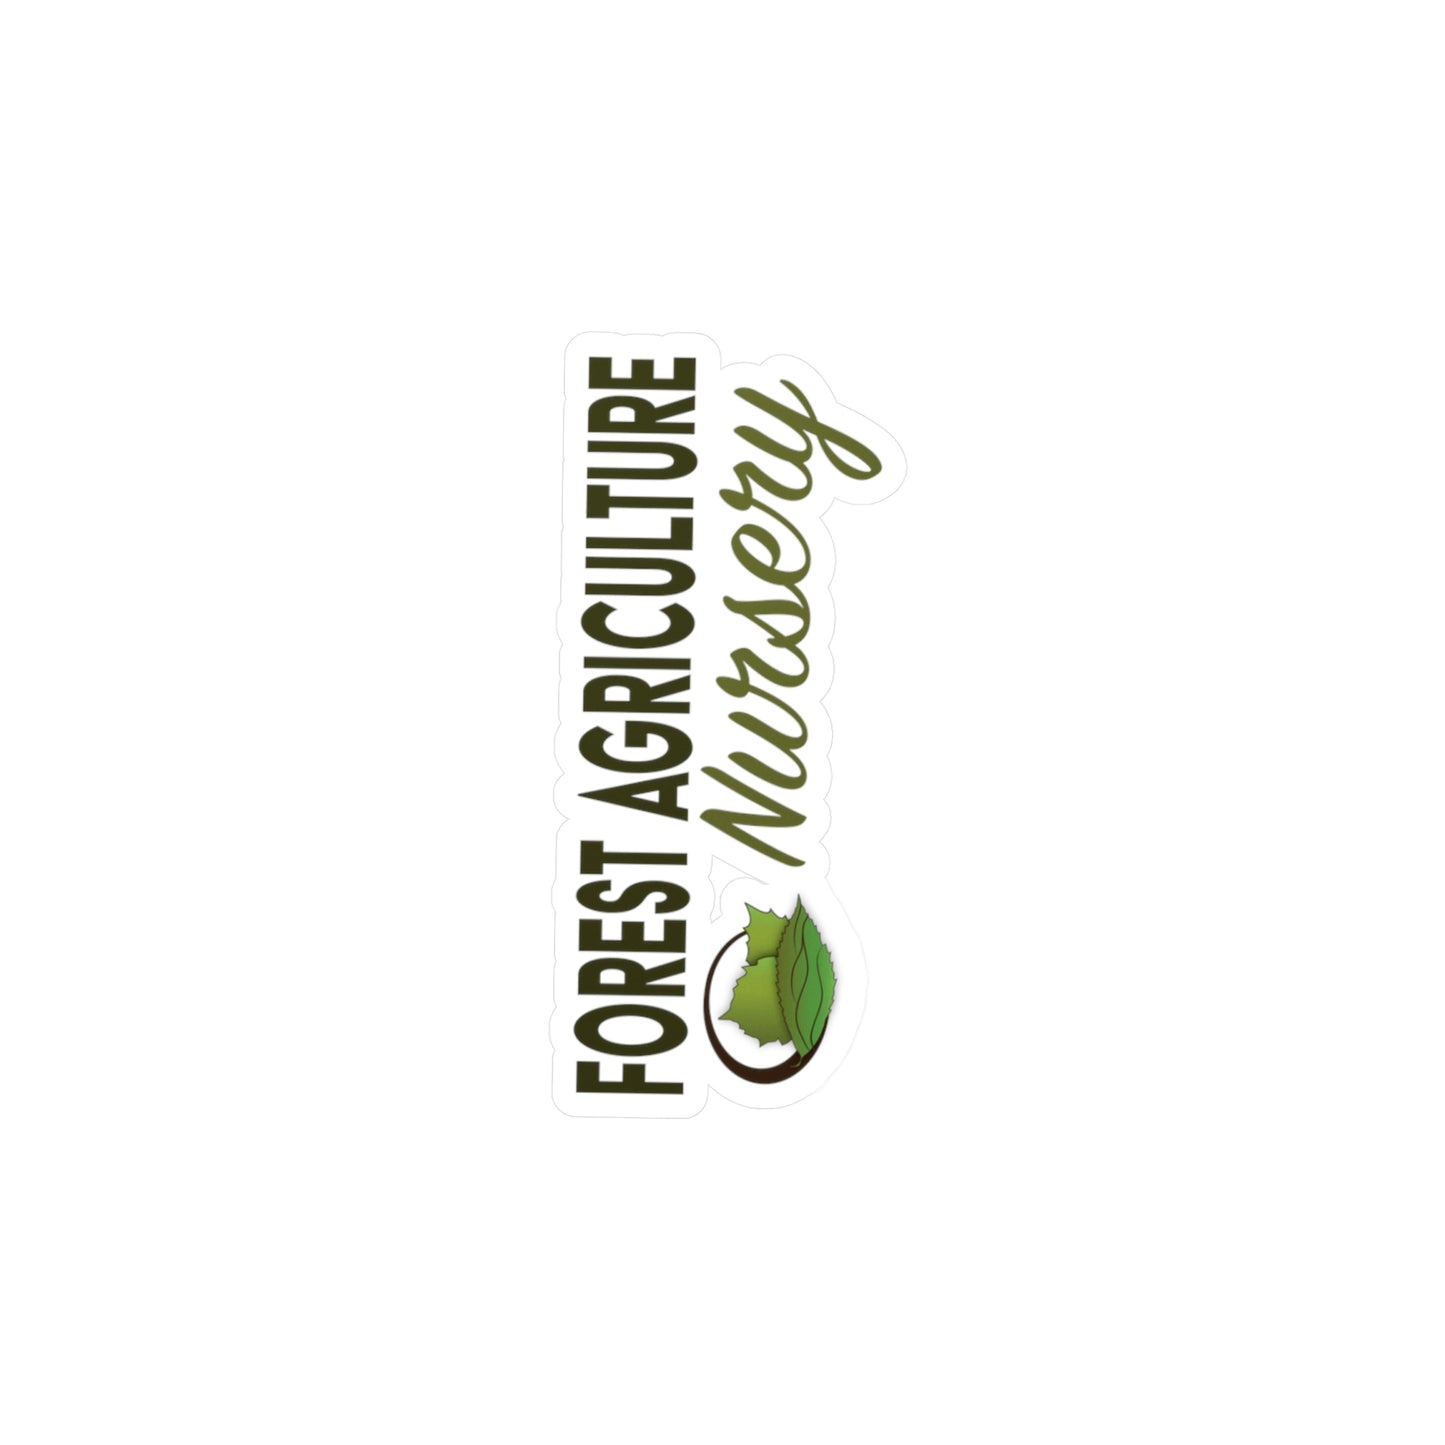 Forest Agriculture Nursery Logo Vinyl Decals